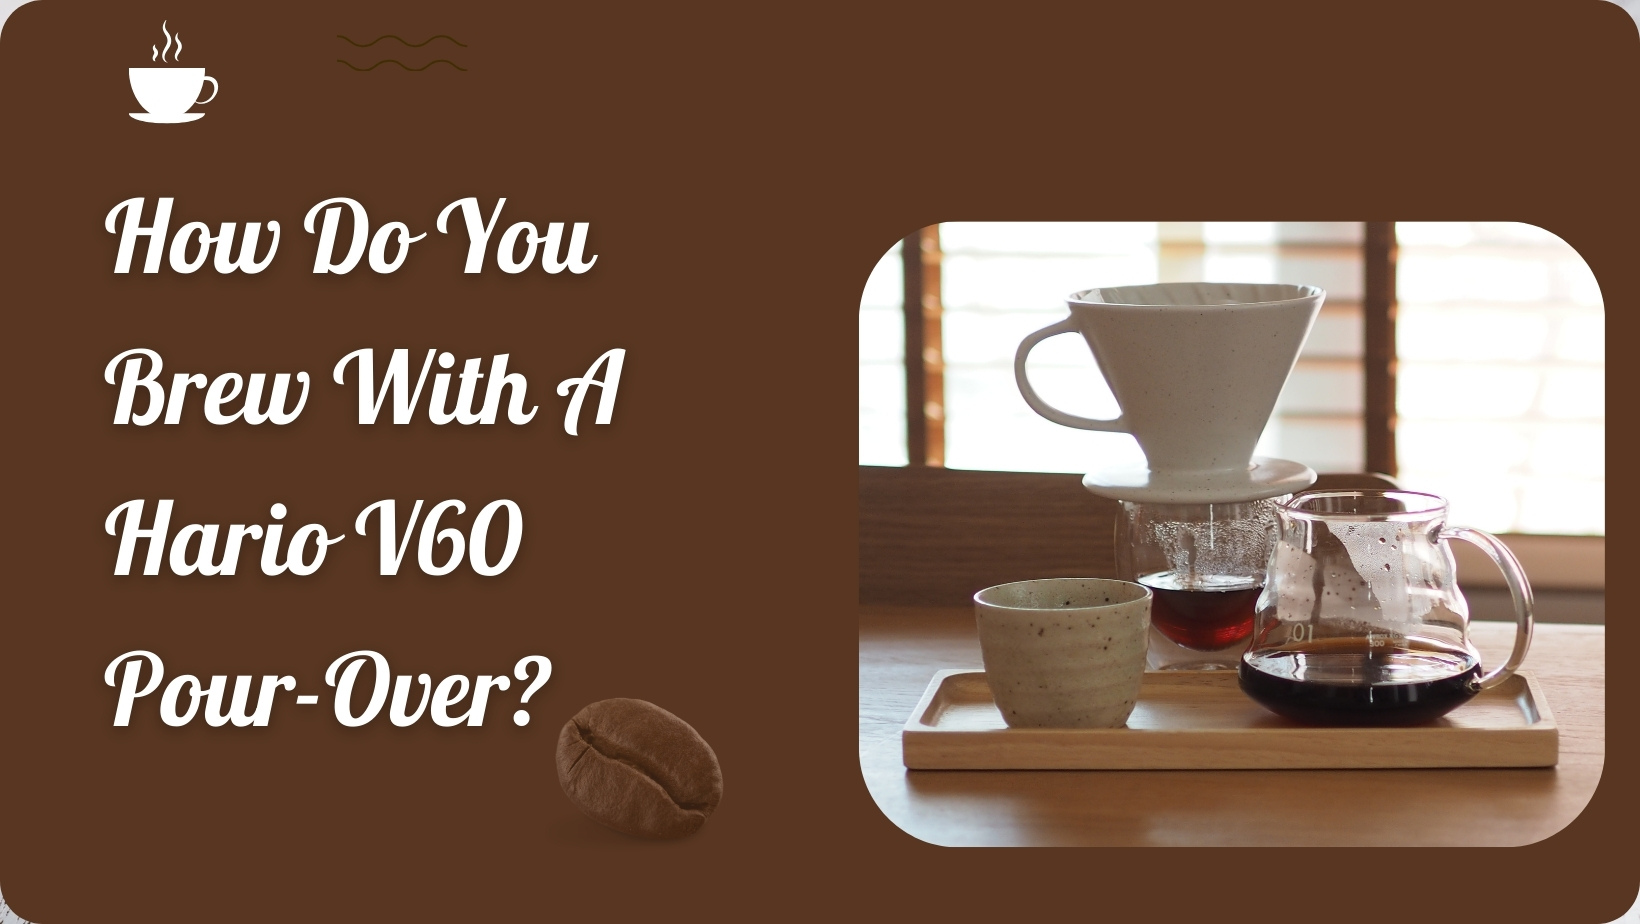 How do you brew with a Hario V60 pour-over?